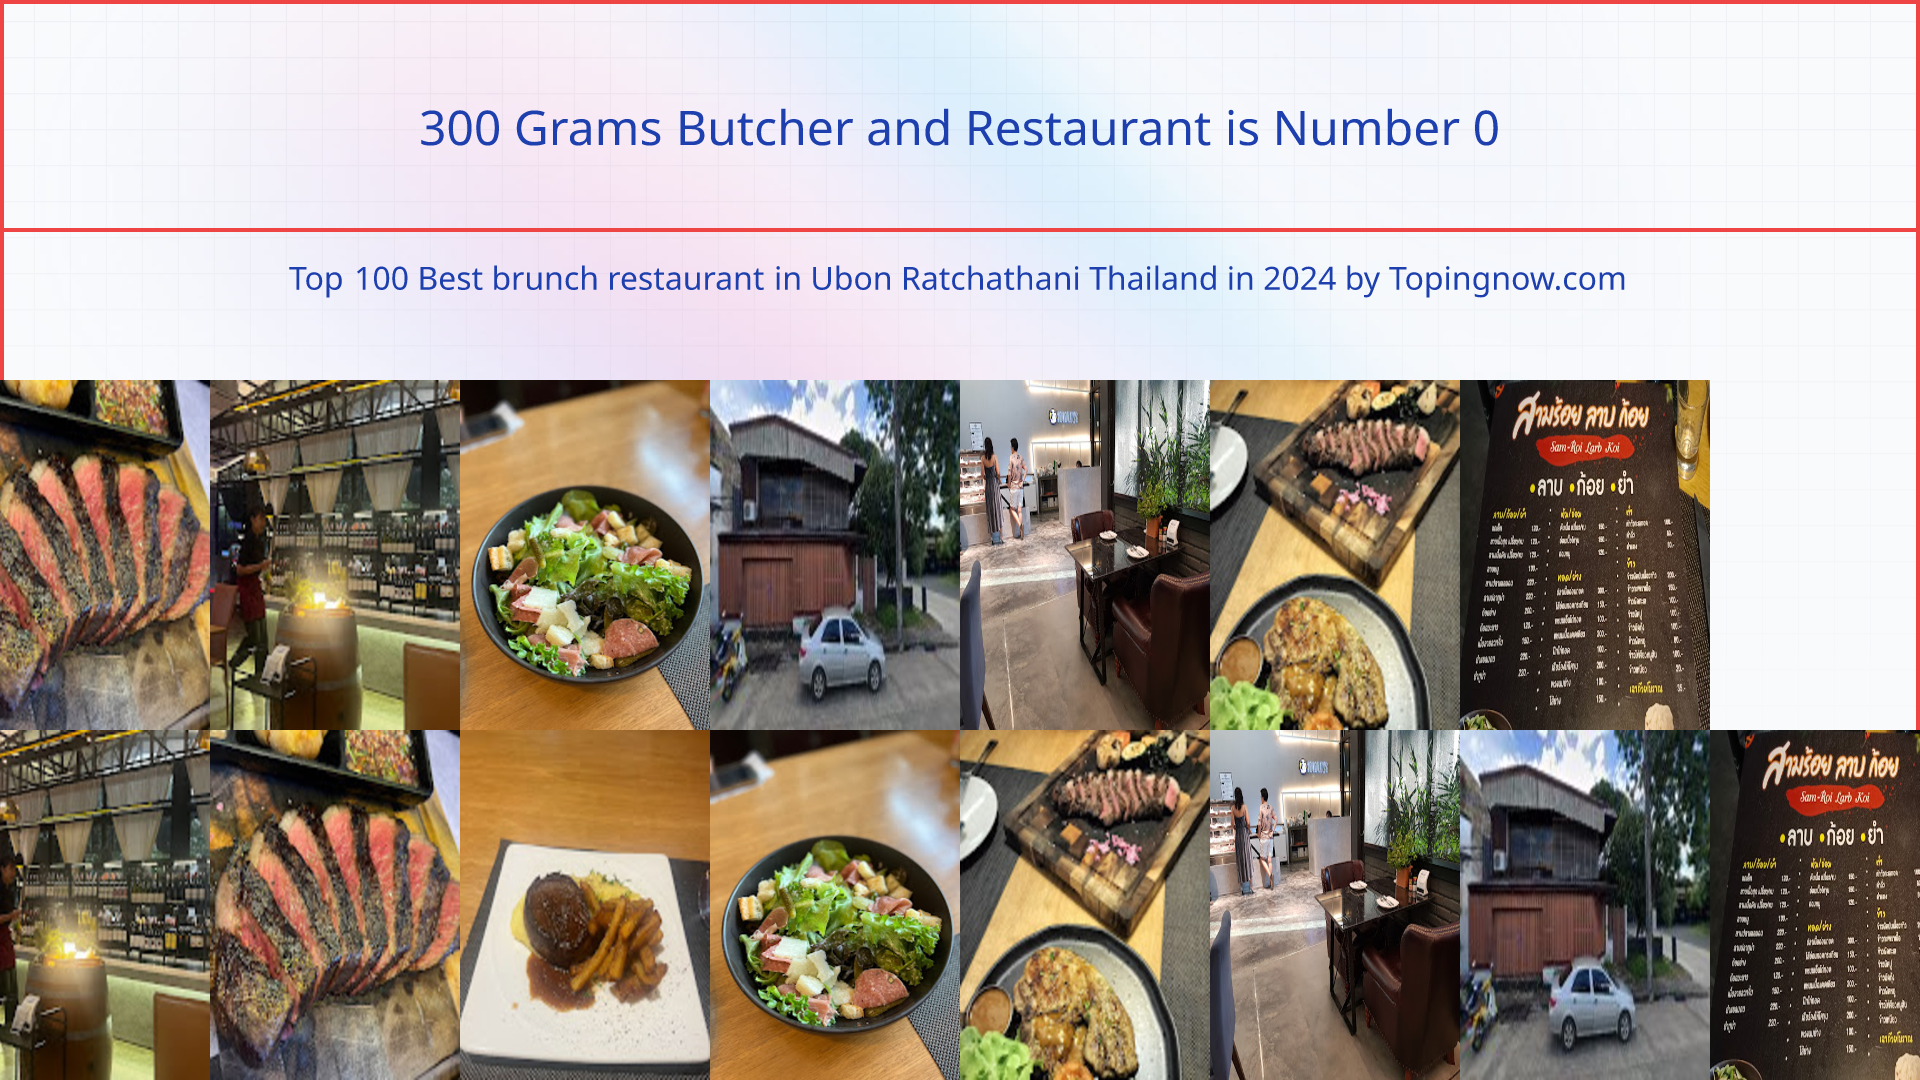 300 Grams Butcher and Restaurant: Top 100 Best brunch restaurant in Ubon Ratchathani Thailand in 2024